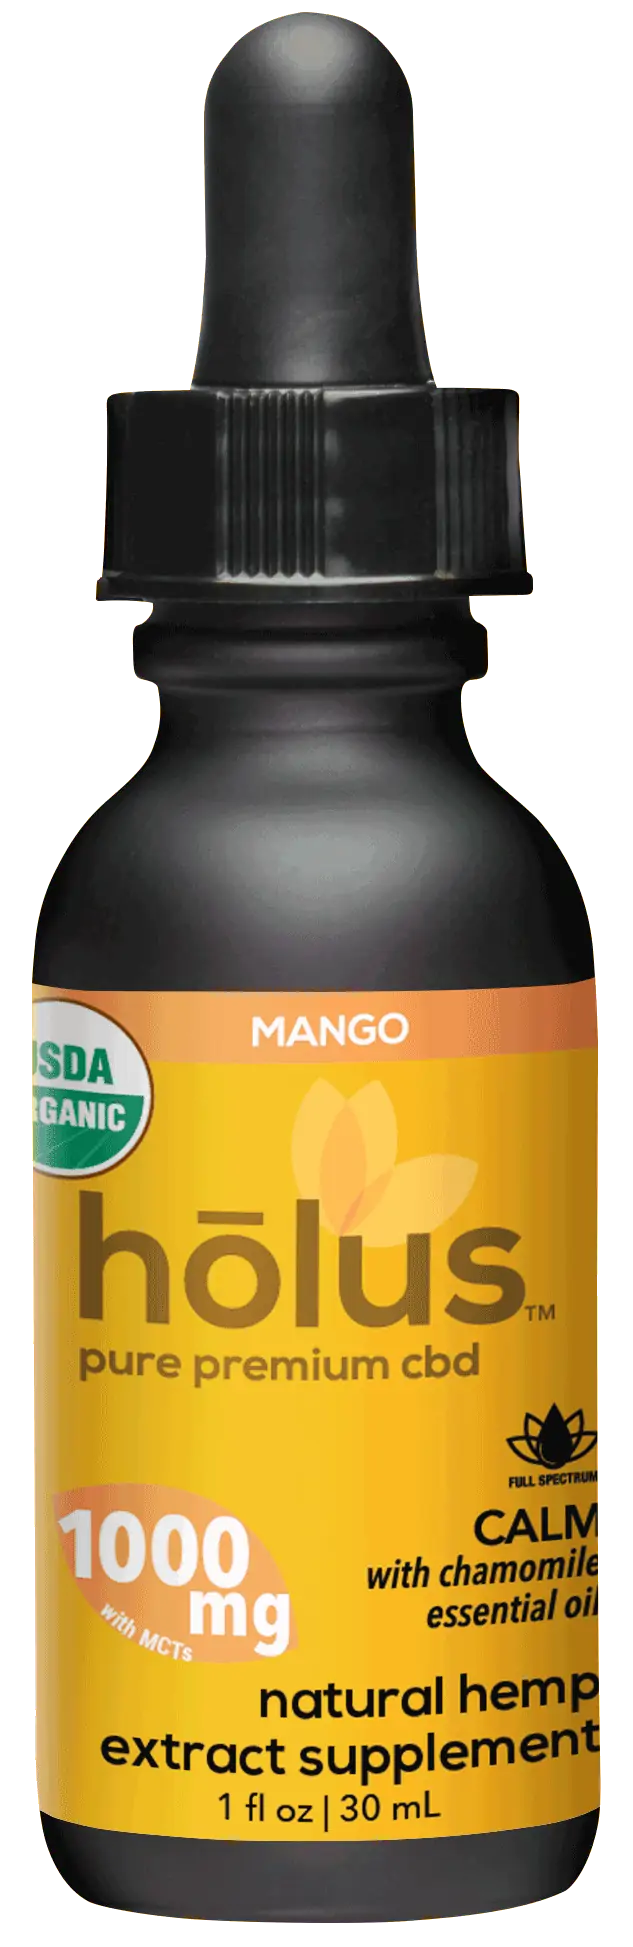 holus-tincture-fs-cmpn-mango-1000mg